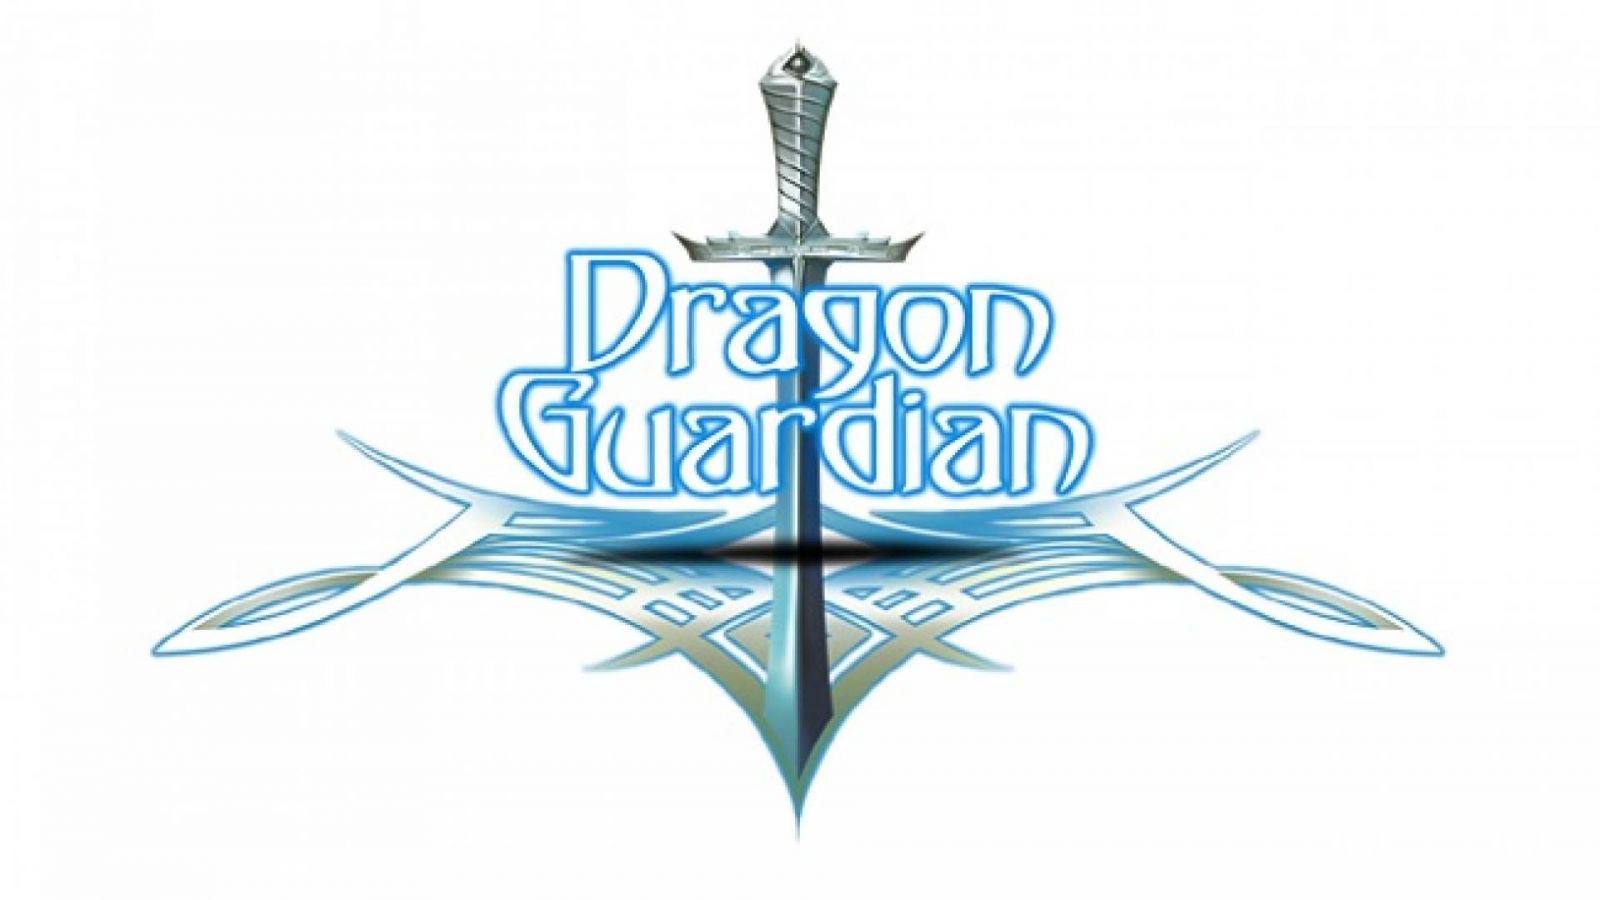 Novo álbum do Dragon Guardian © Dragon Guardian